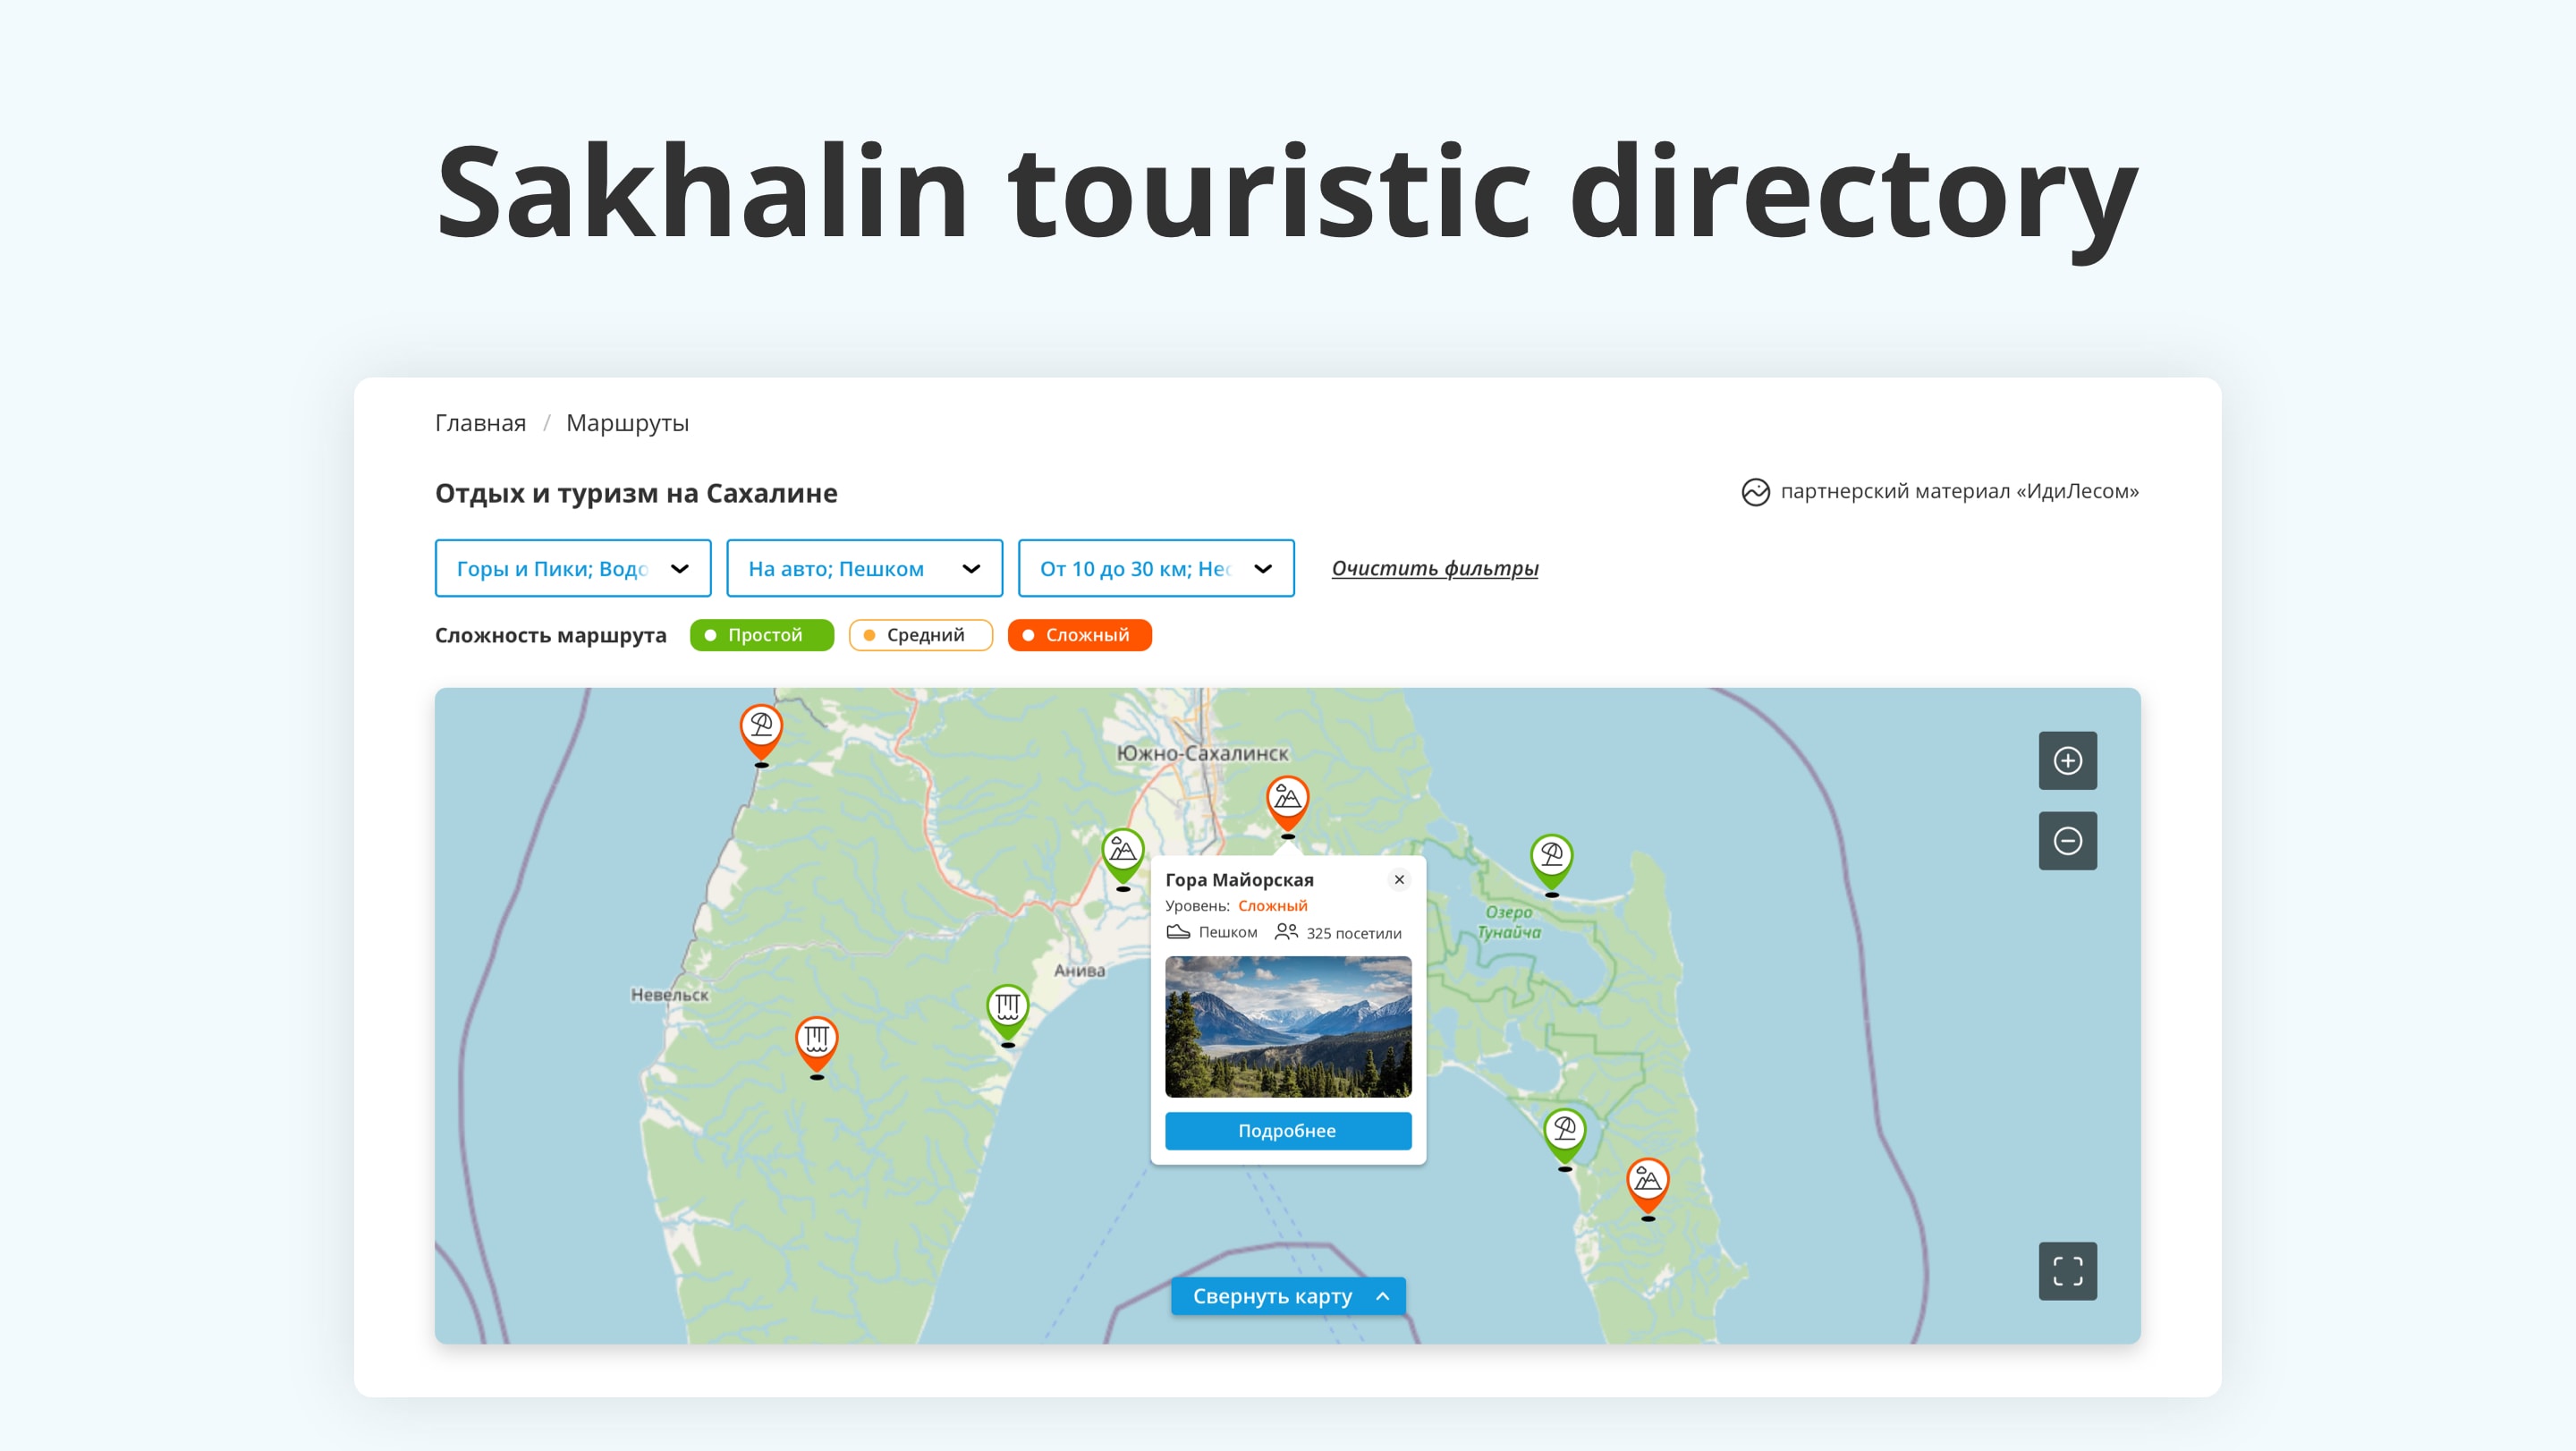 GoSakh.com - Sakhalin touristic directory